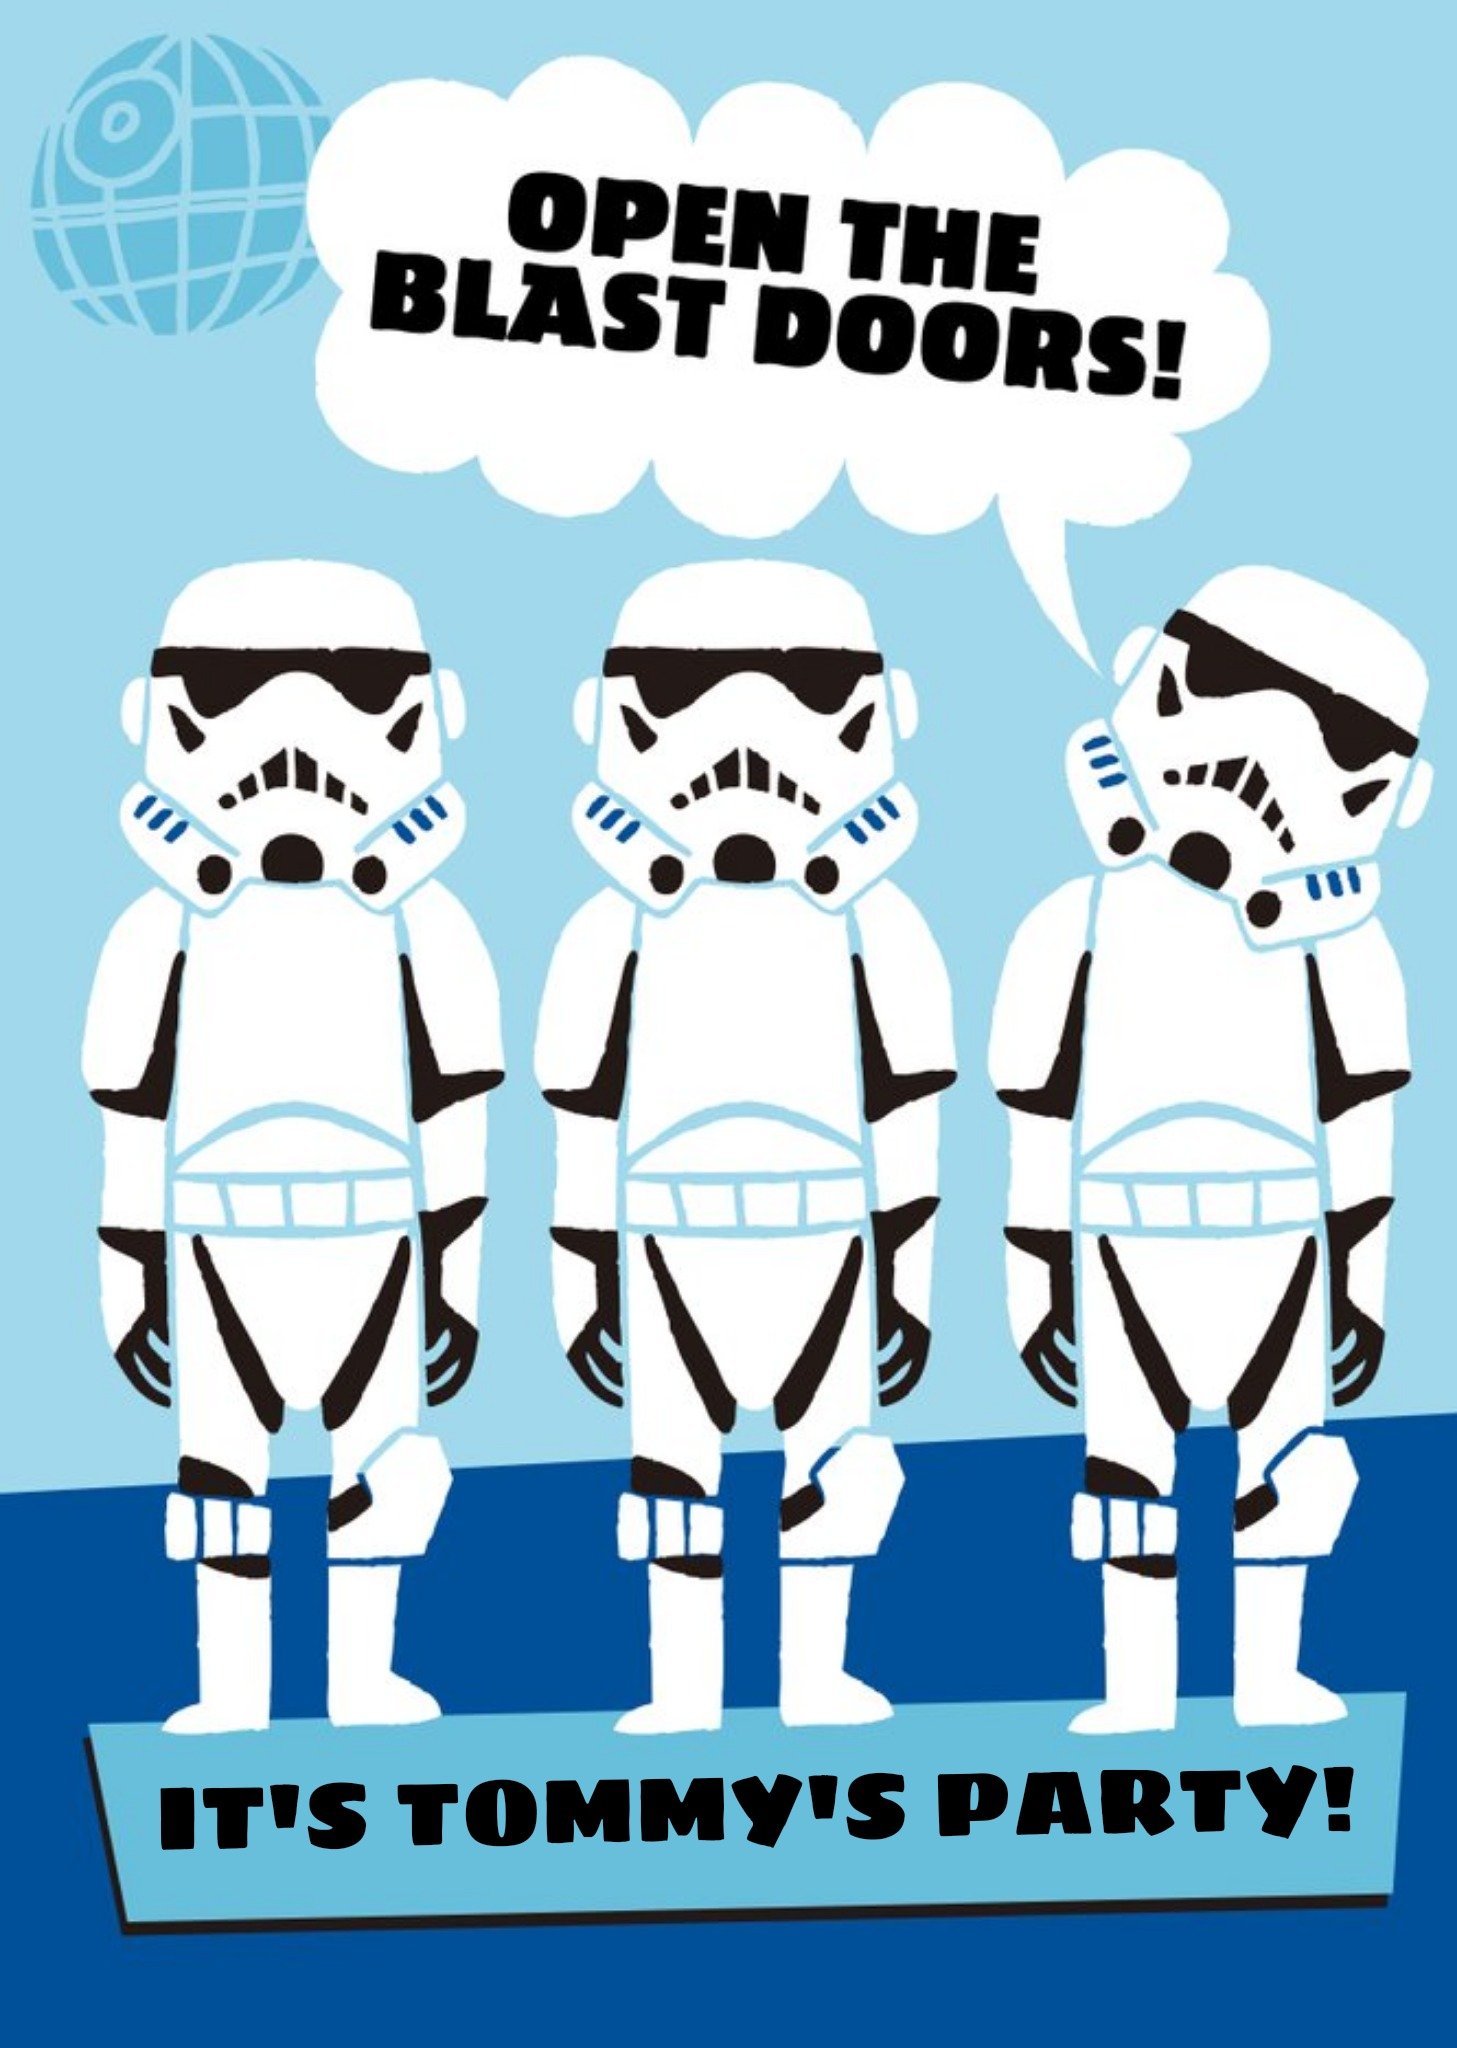 Disney Star Wars Stormtroopers Birthday Party Invitation, Standard Card